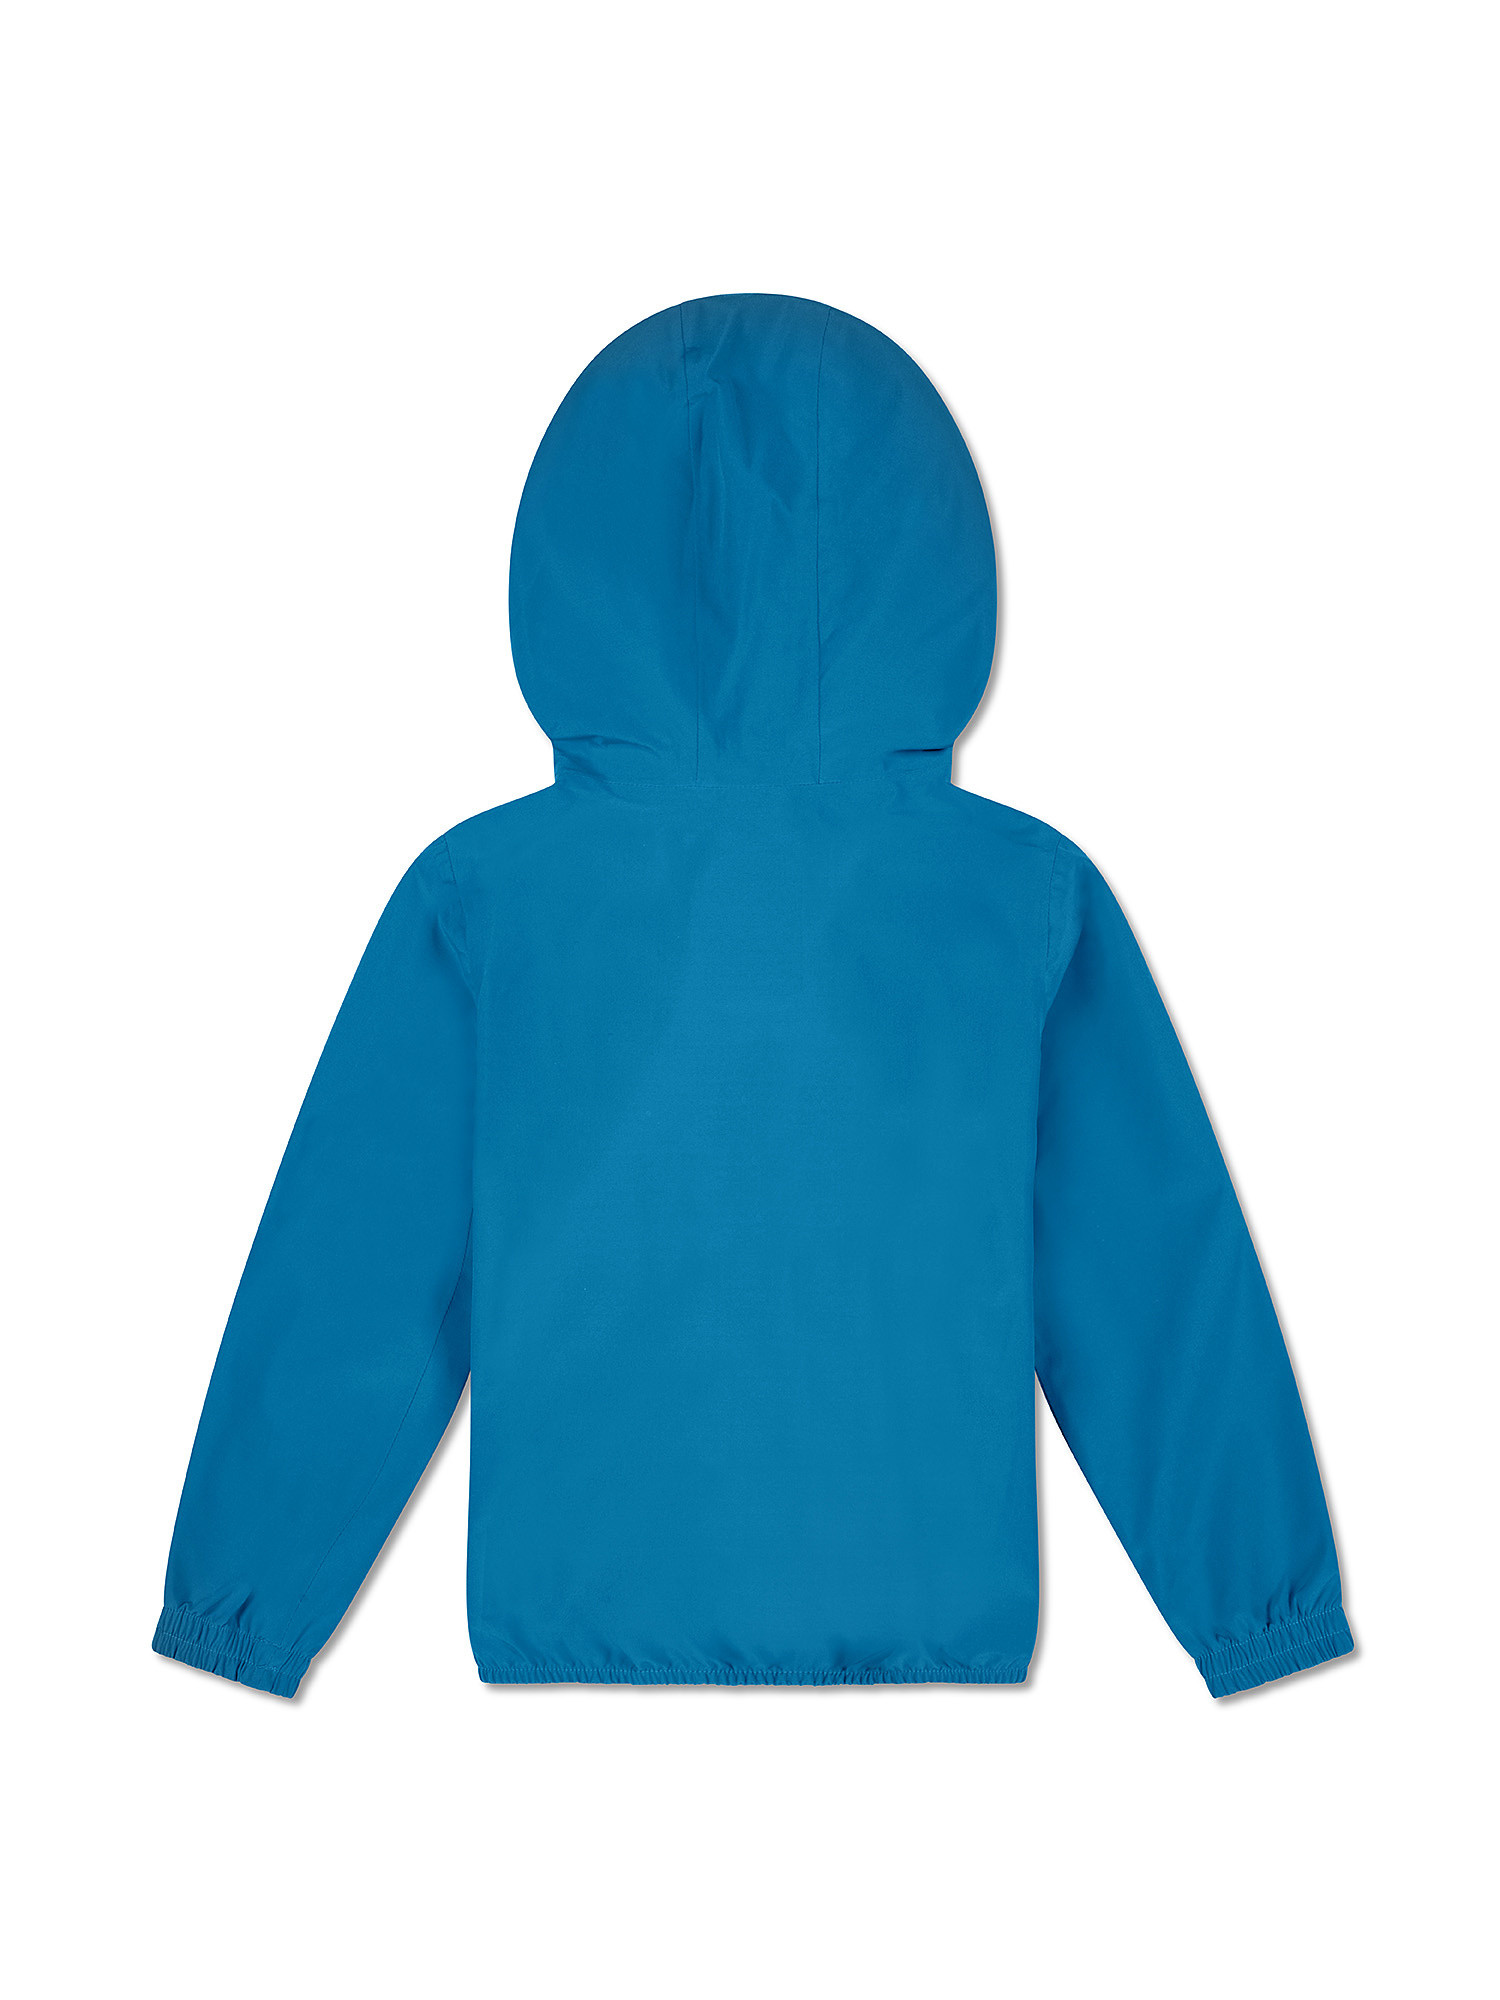 Waterproof baby jacket, Light Blue, large image number 1